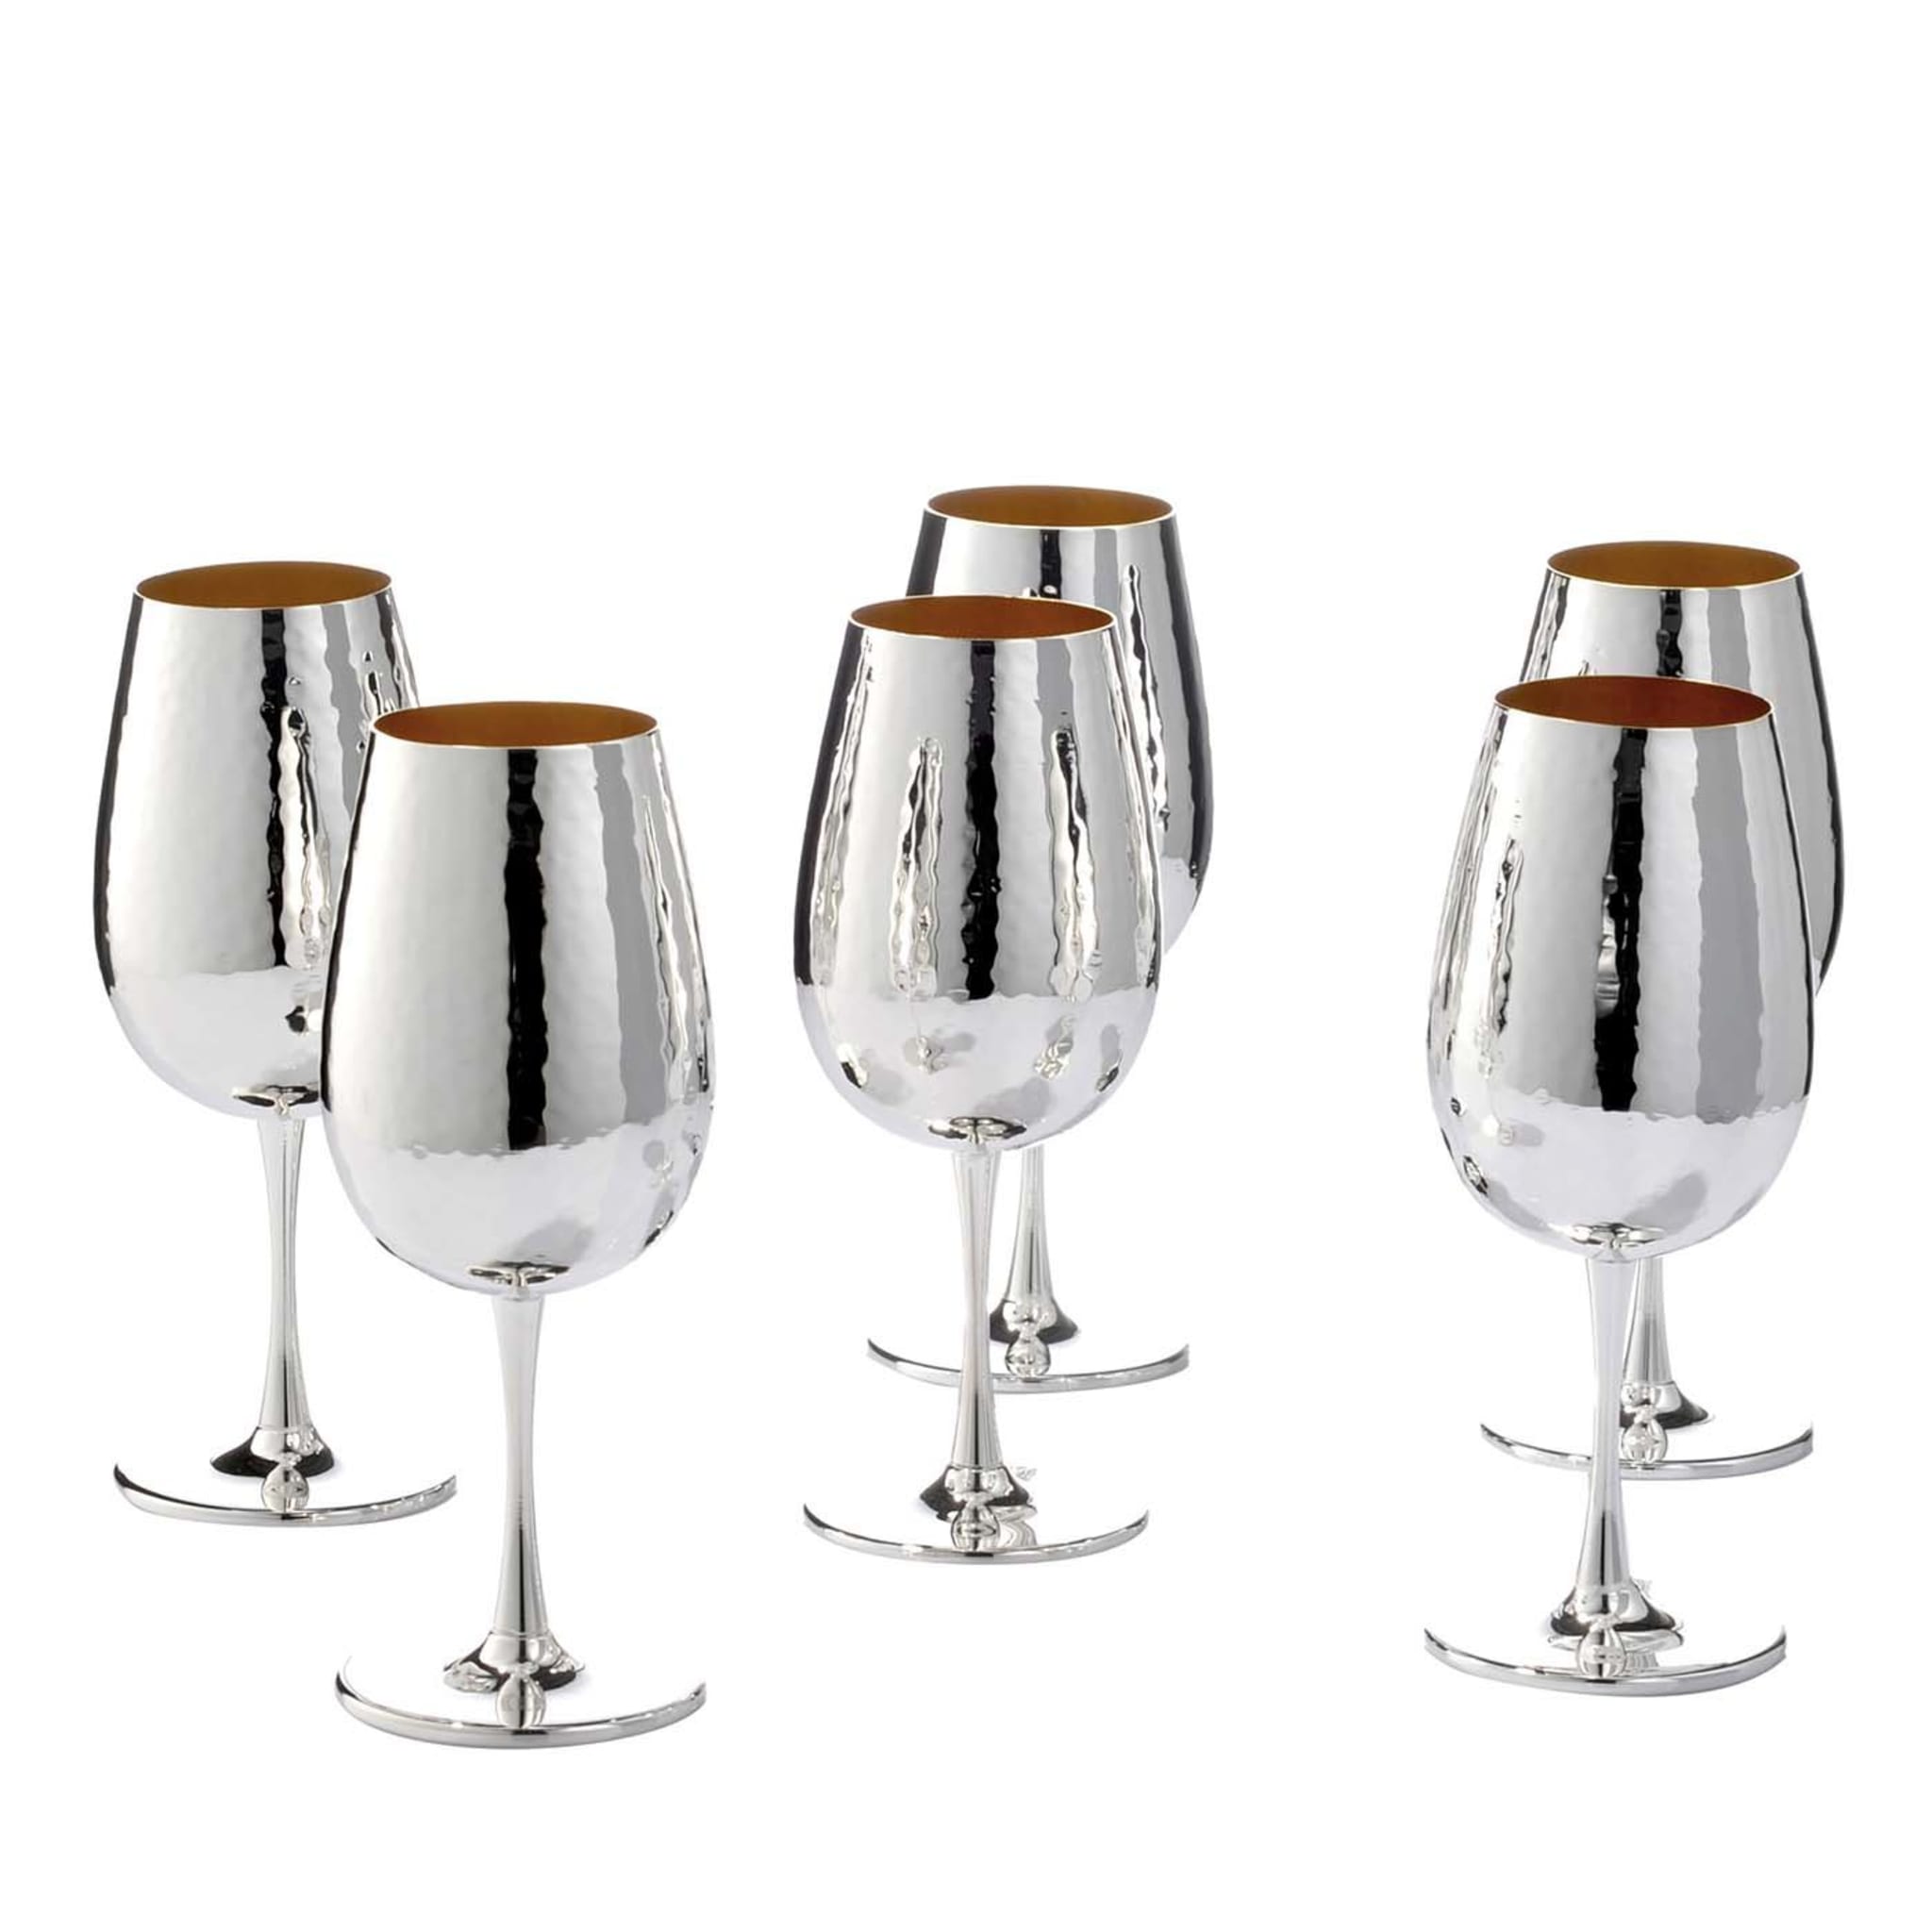 Set of 6 Wine Tasting Glasses - Main view